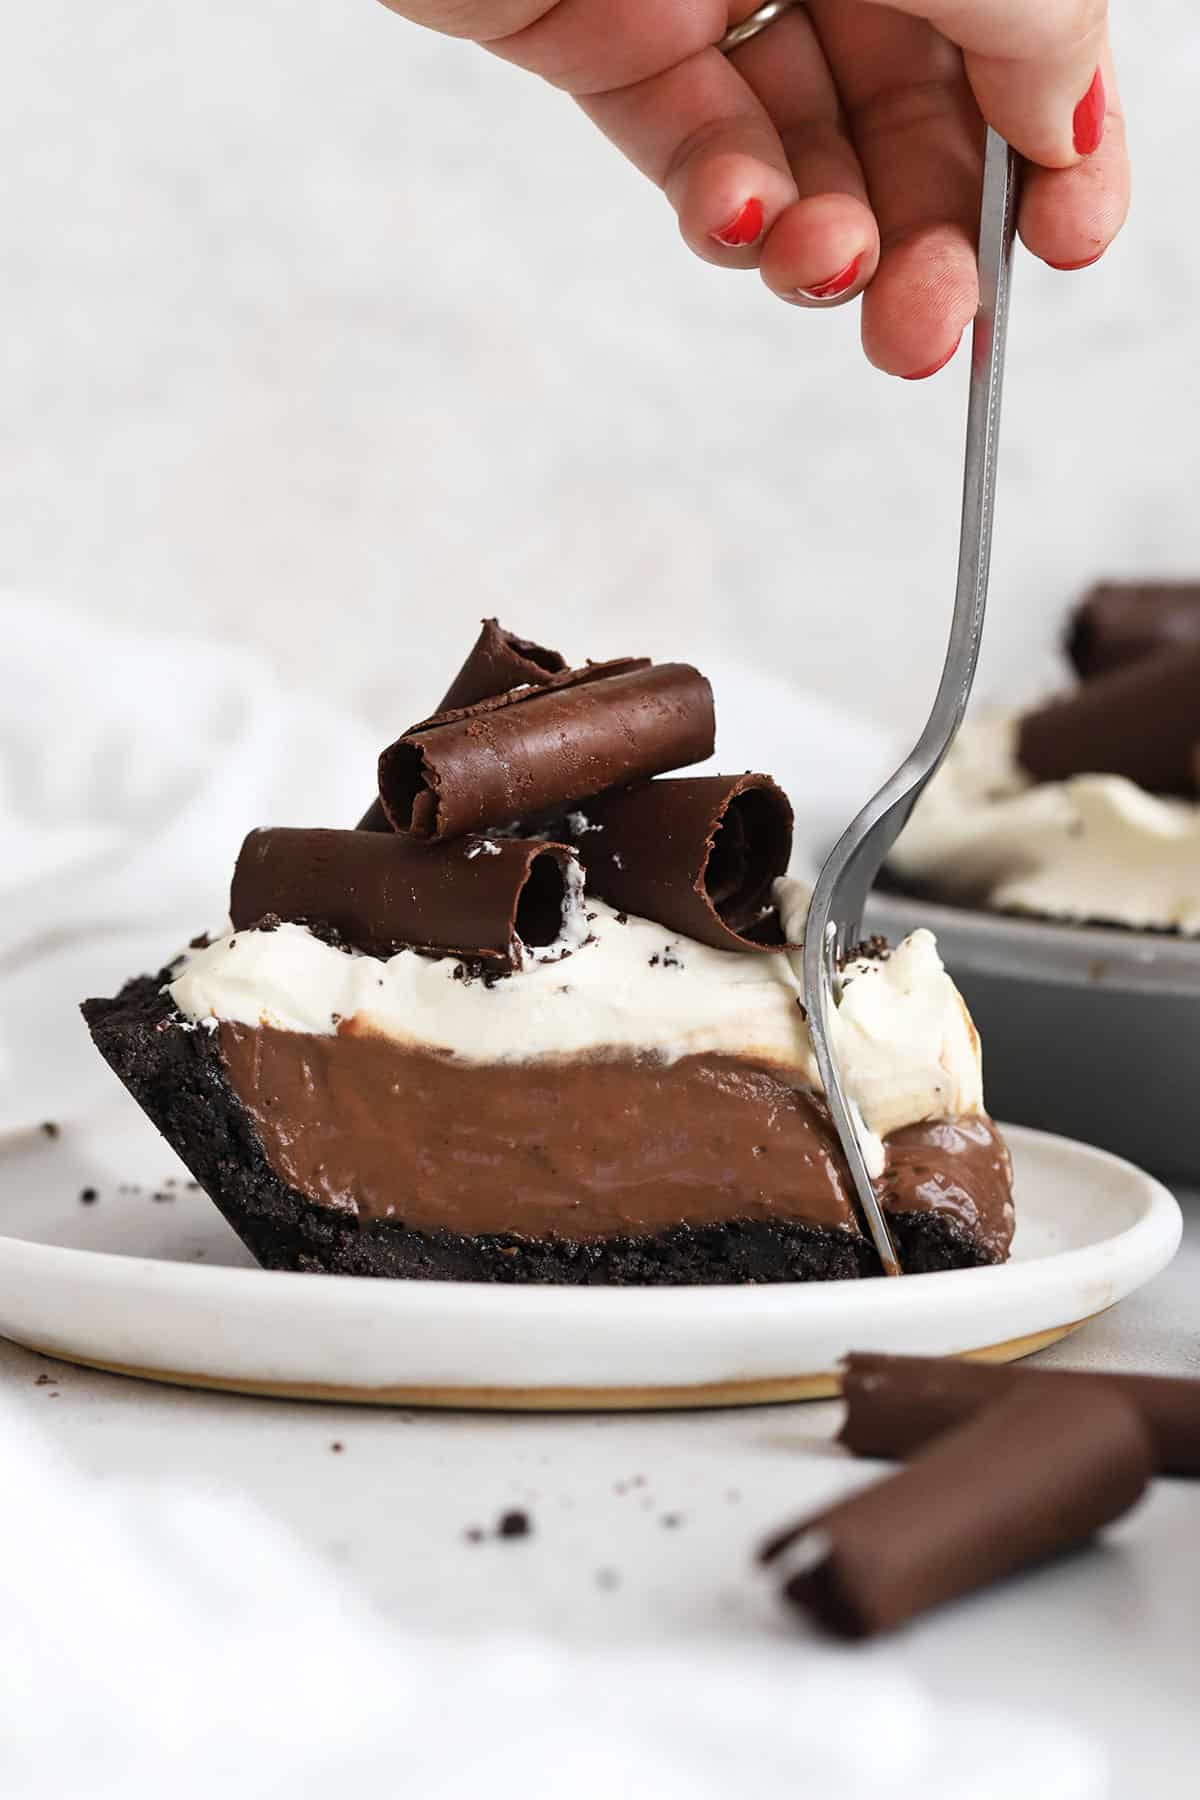 A fork scooping a bite of gluten-free chocolate cream pie